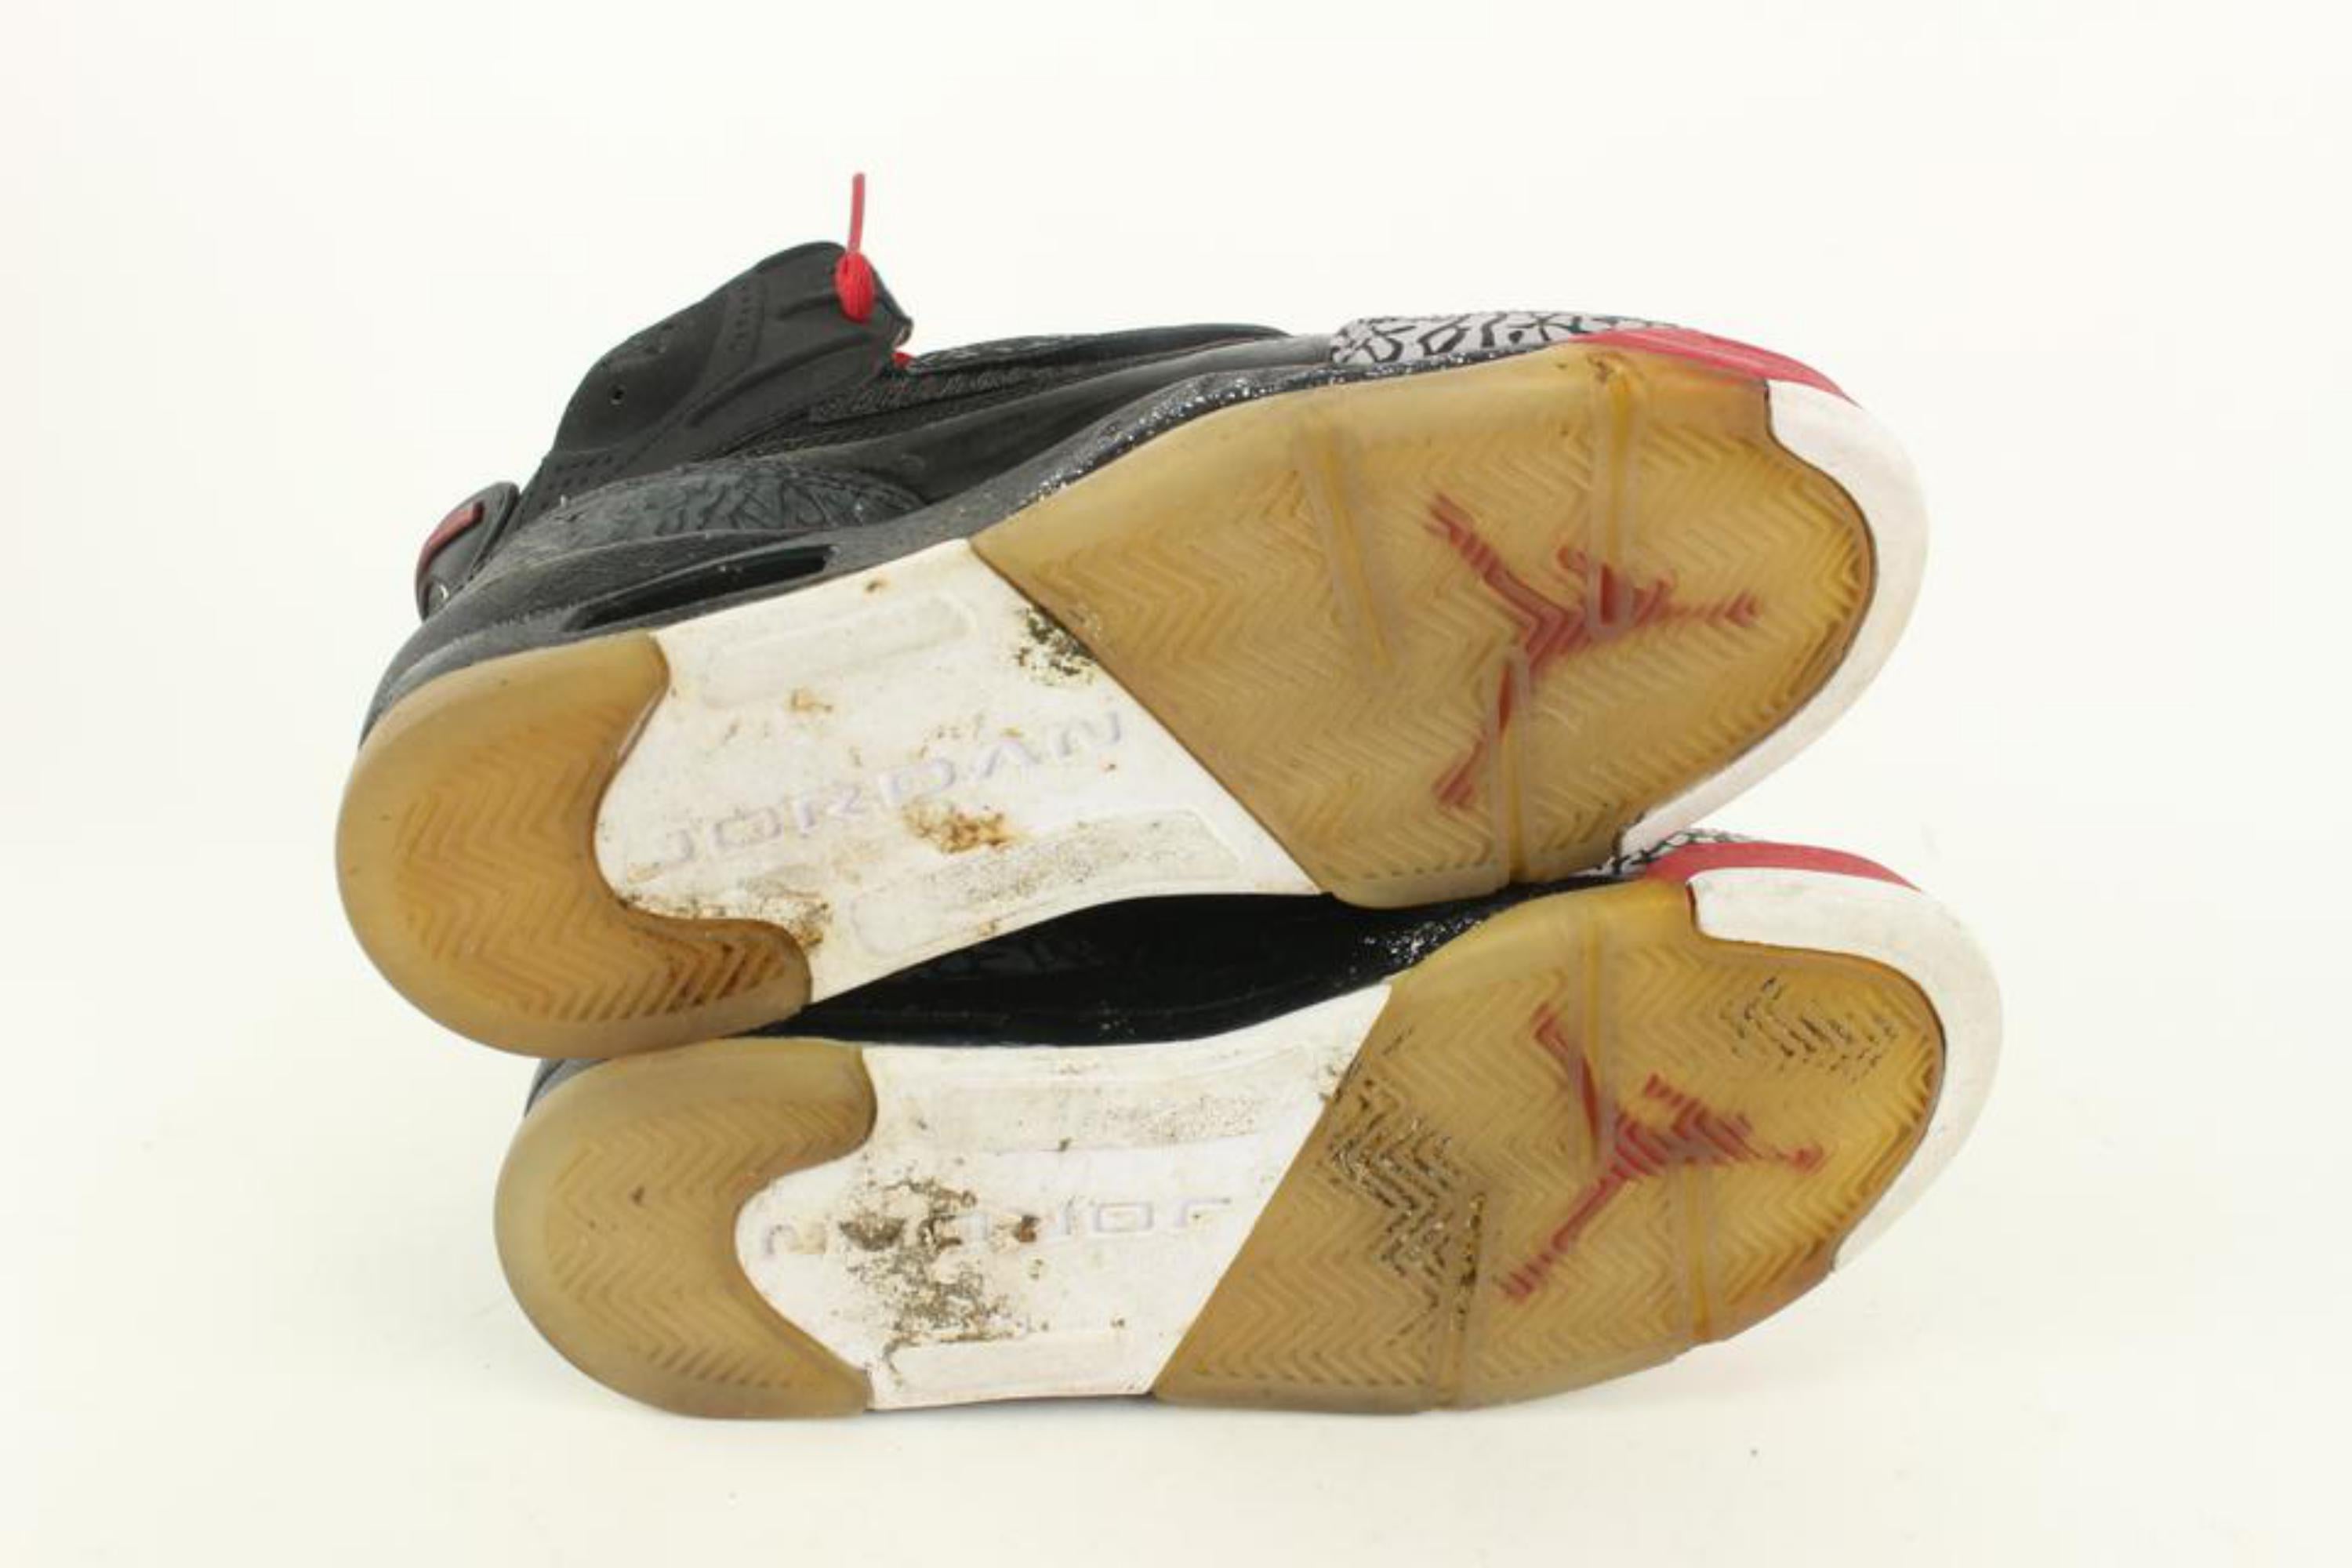 Nike 2012 Youth 7US Cement Black Red Air Jordan Son of Mars 512246-001 1